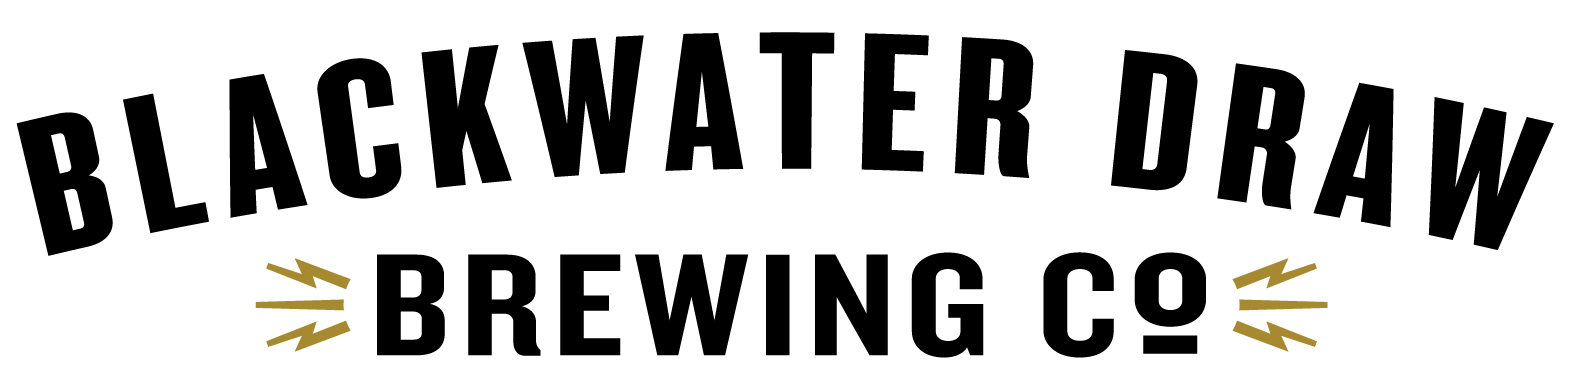 Blackwater draw brewing co.